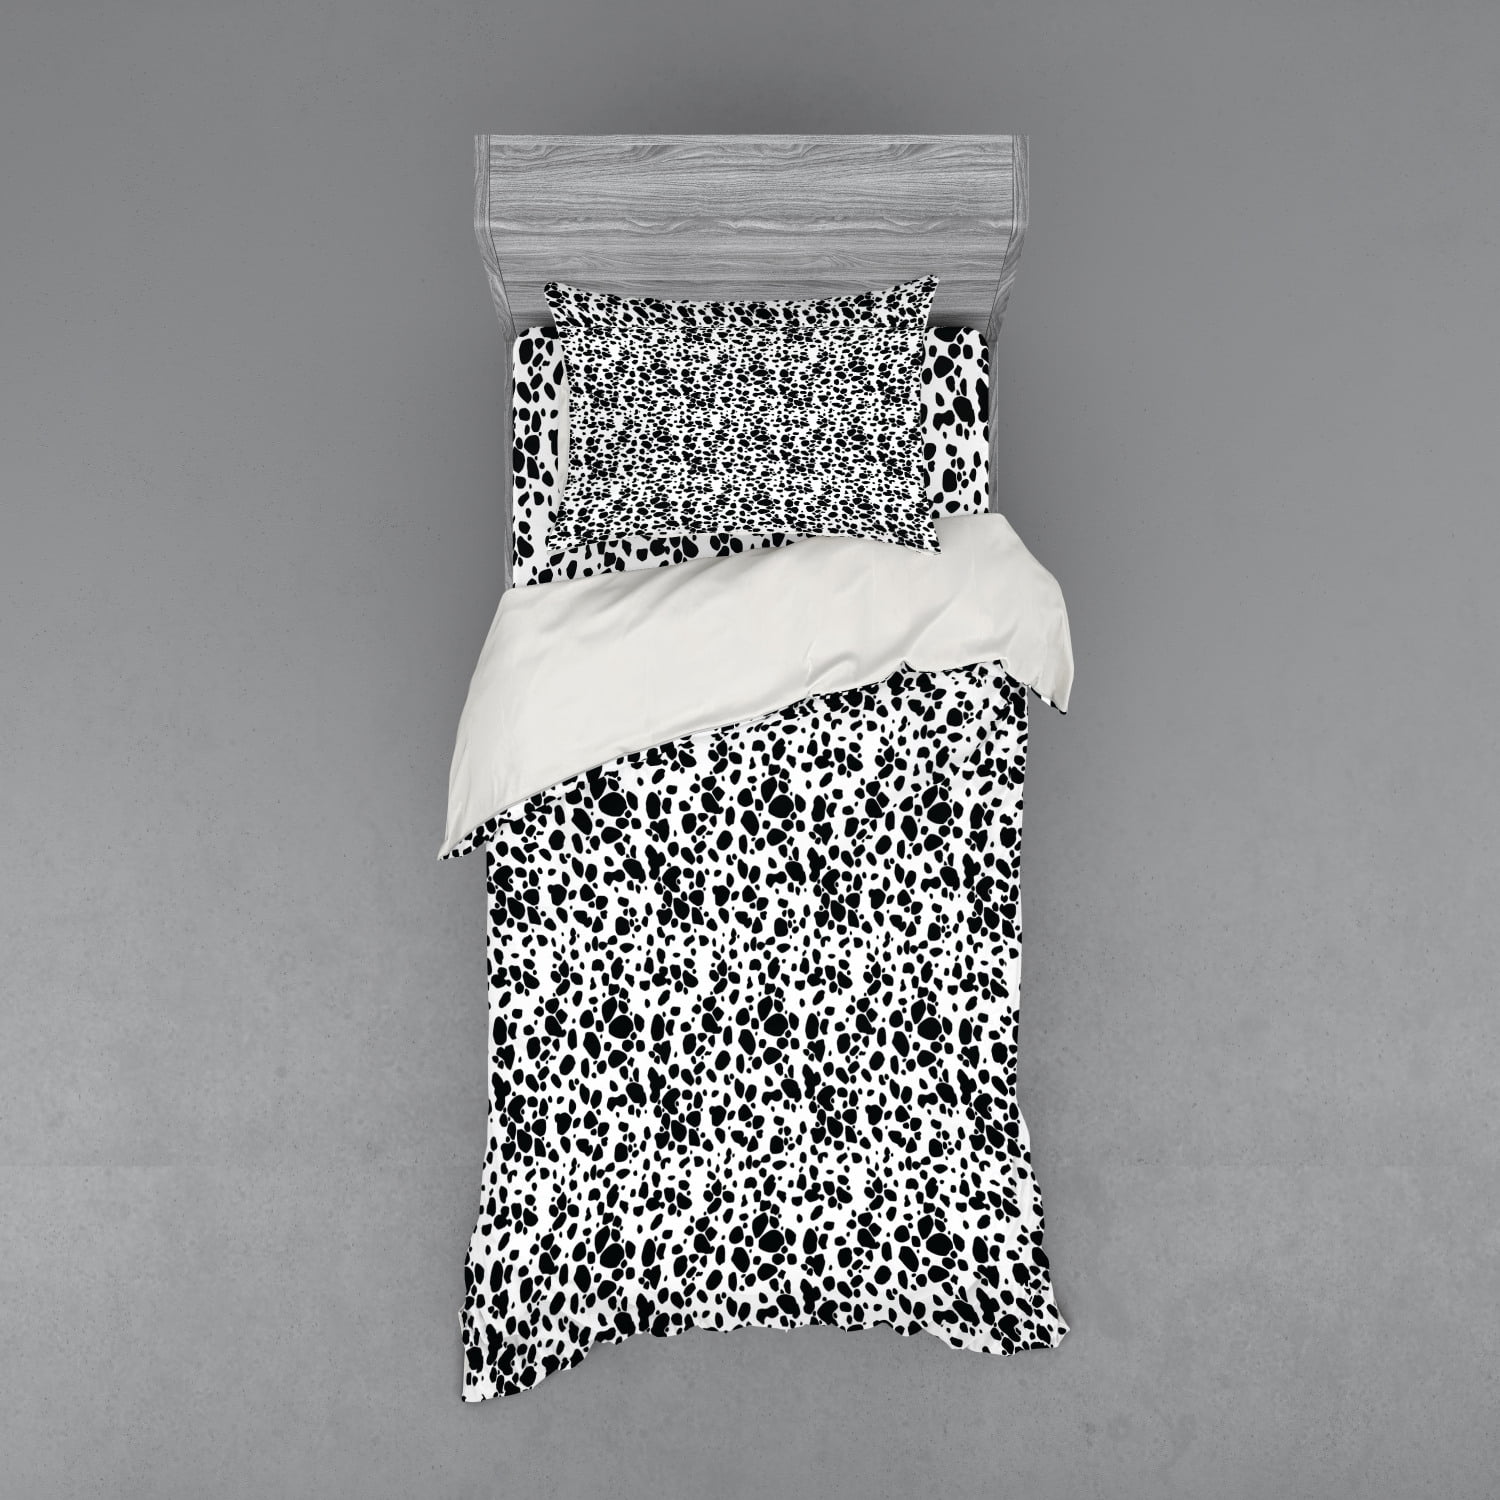 Dalmatian Dog Print Duvet Cover Set Black And White Puppy Spots